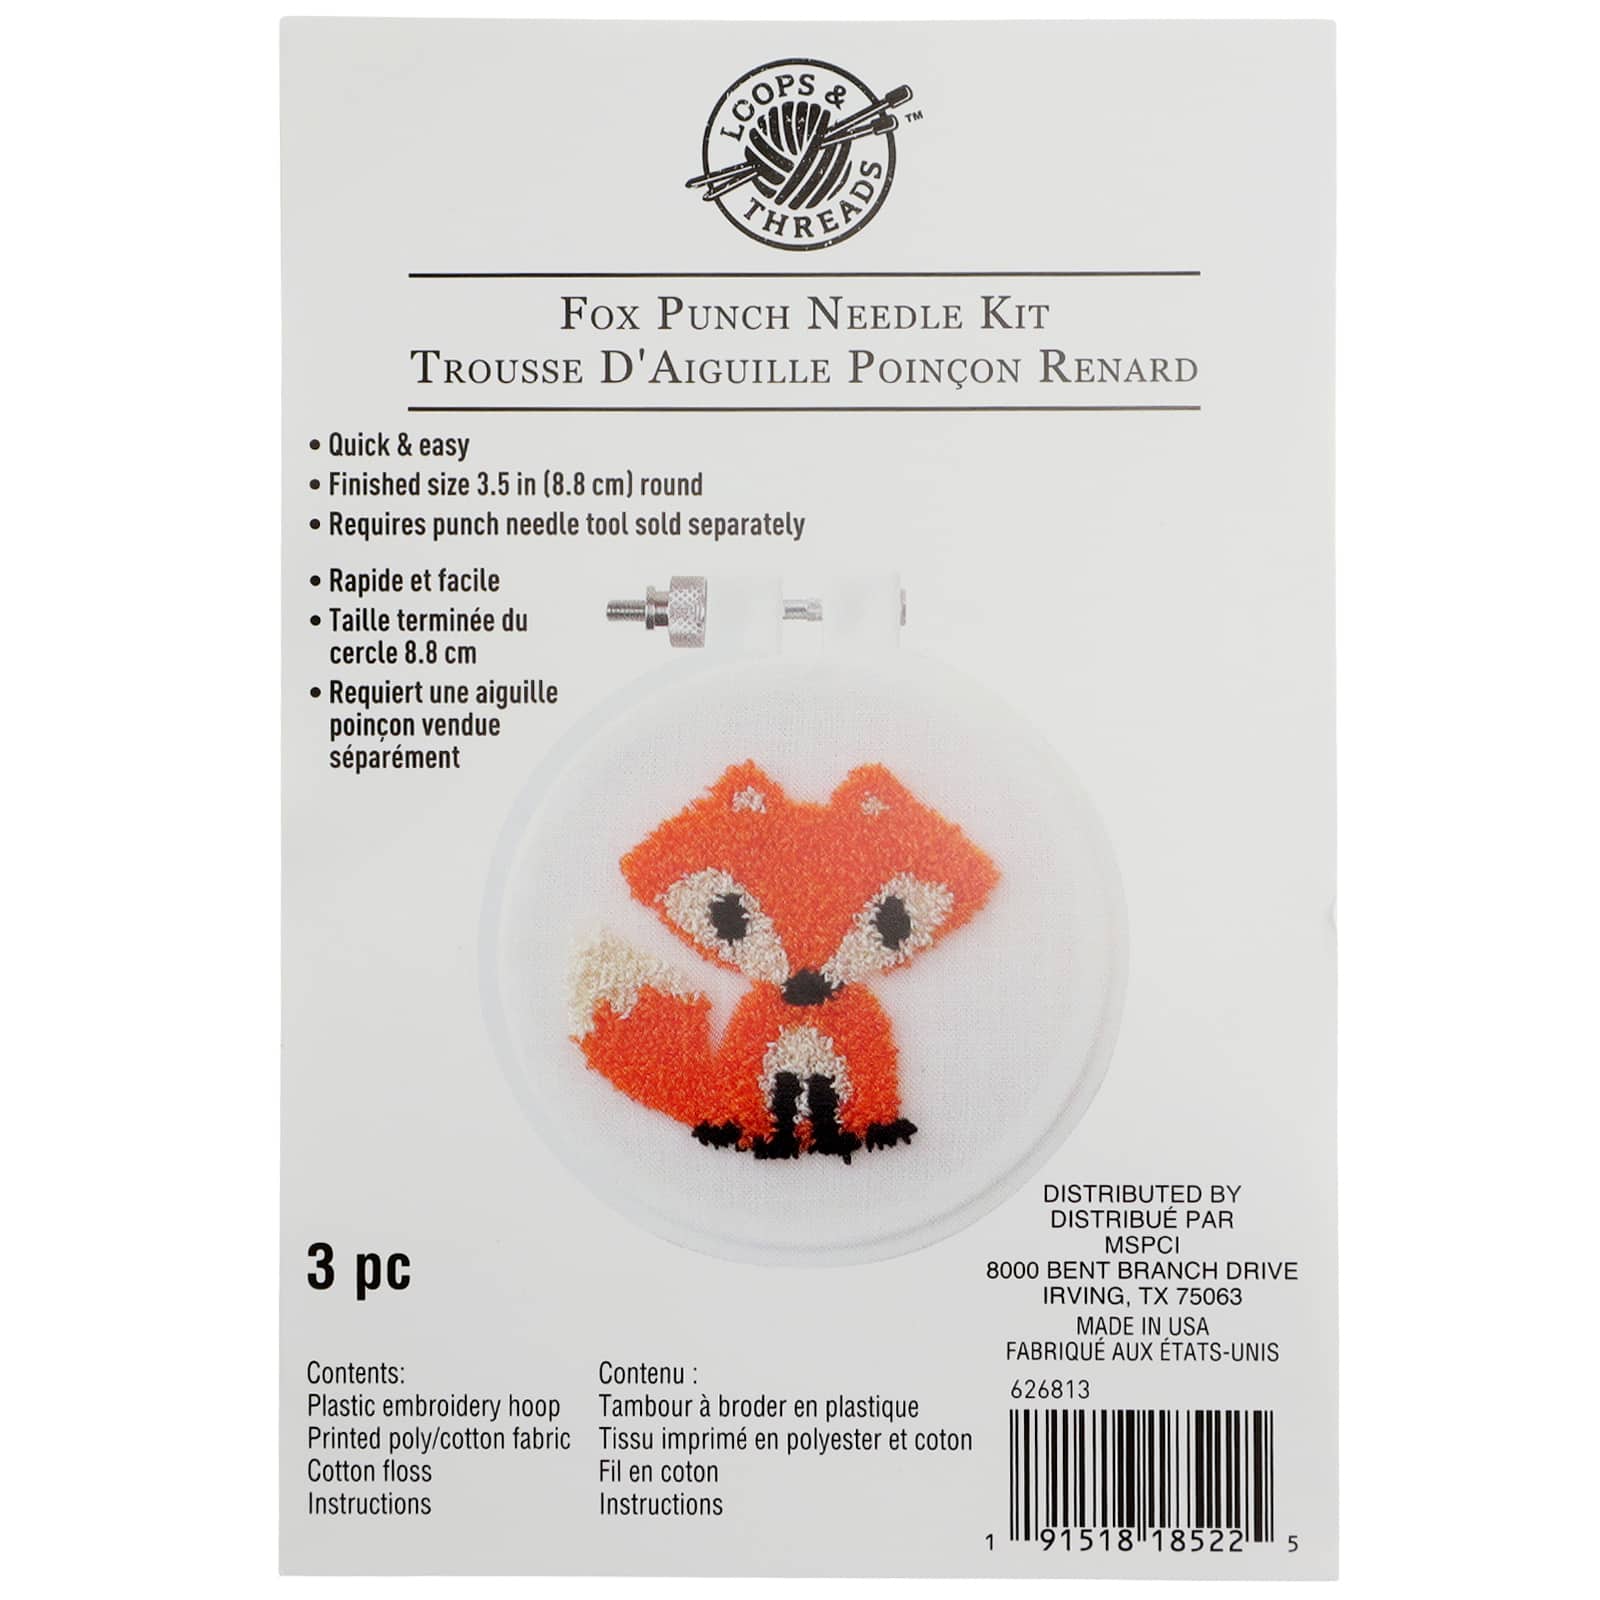 Fabric Edition, Inc. Beetle Hoop Punch Needle Kit